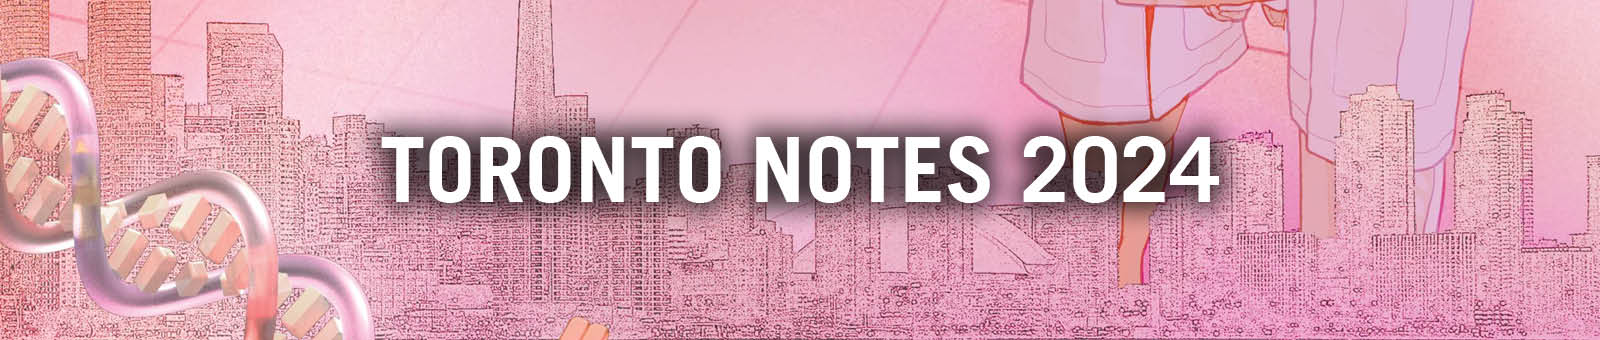 Toronto Notes 2024 